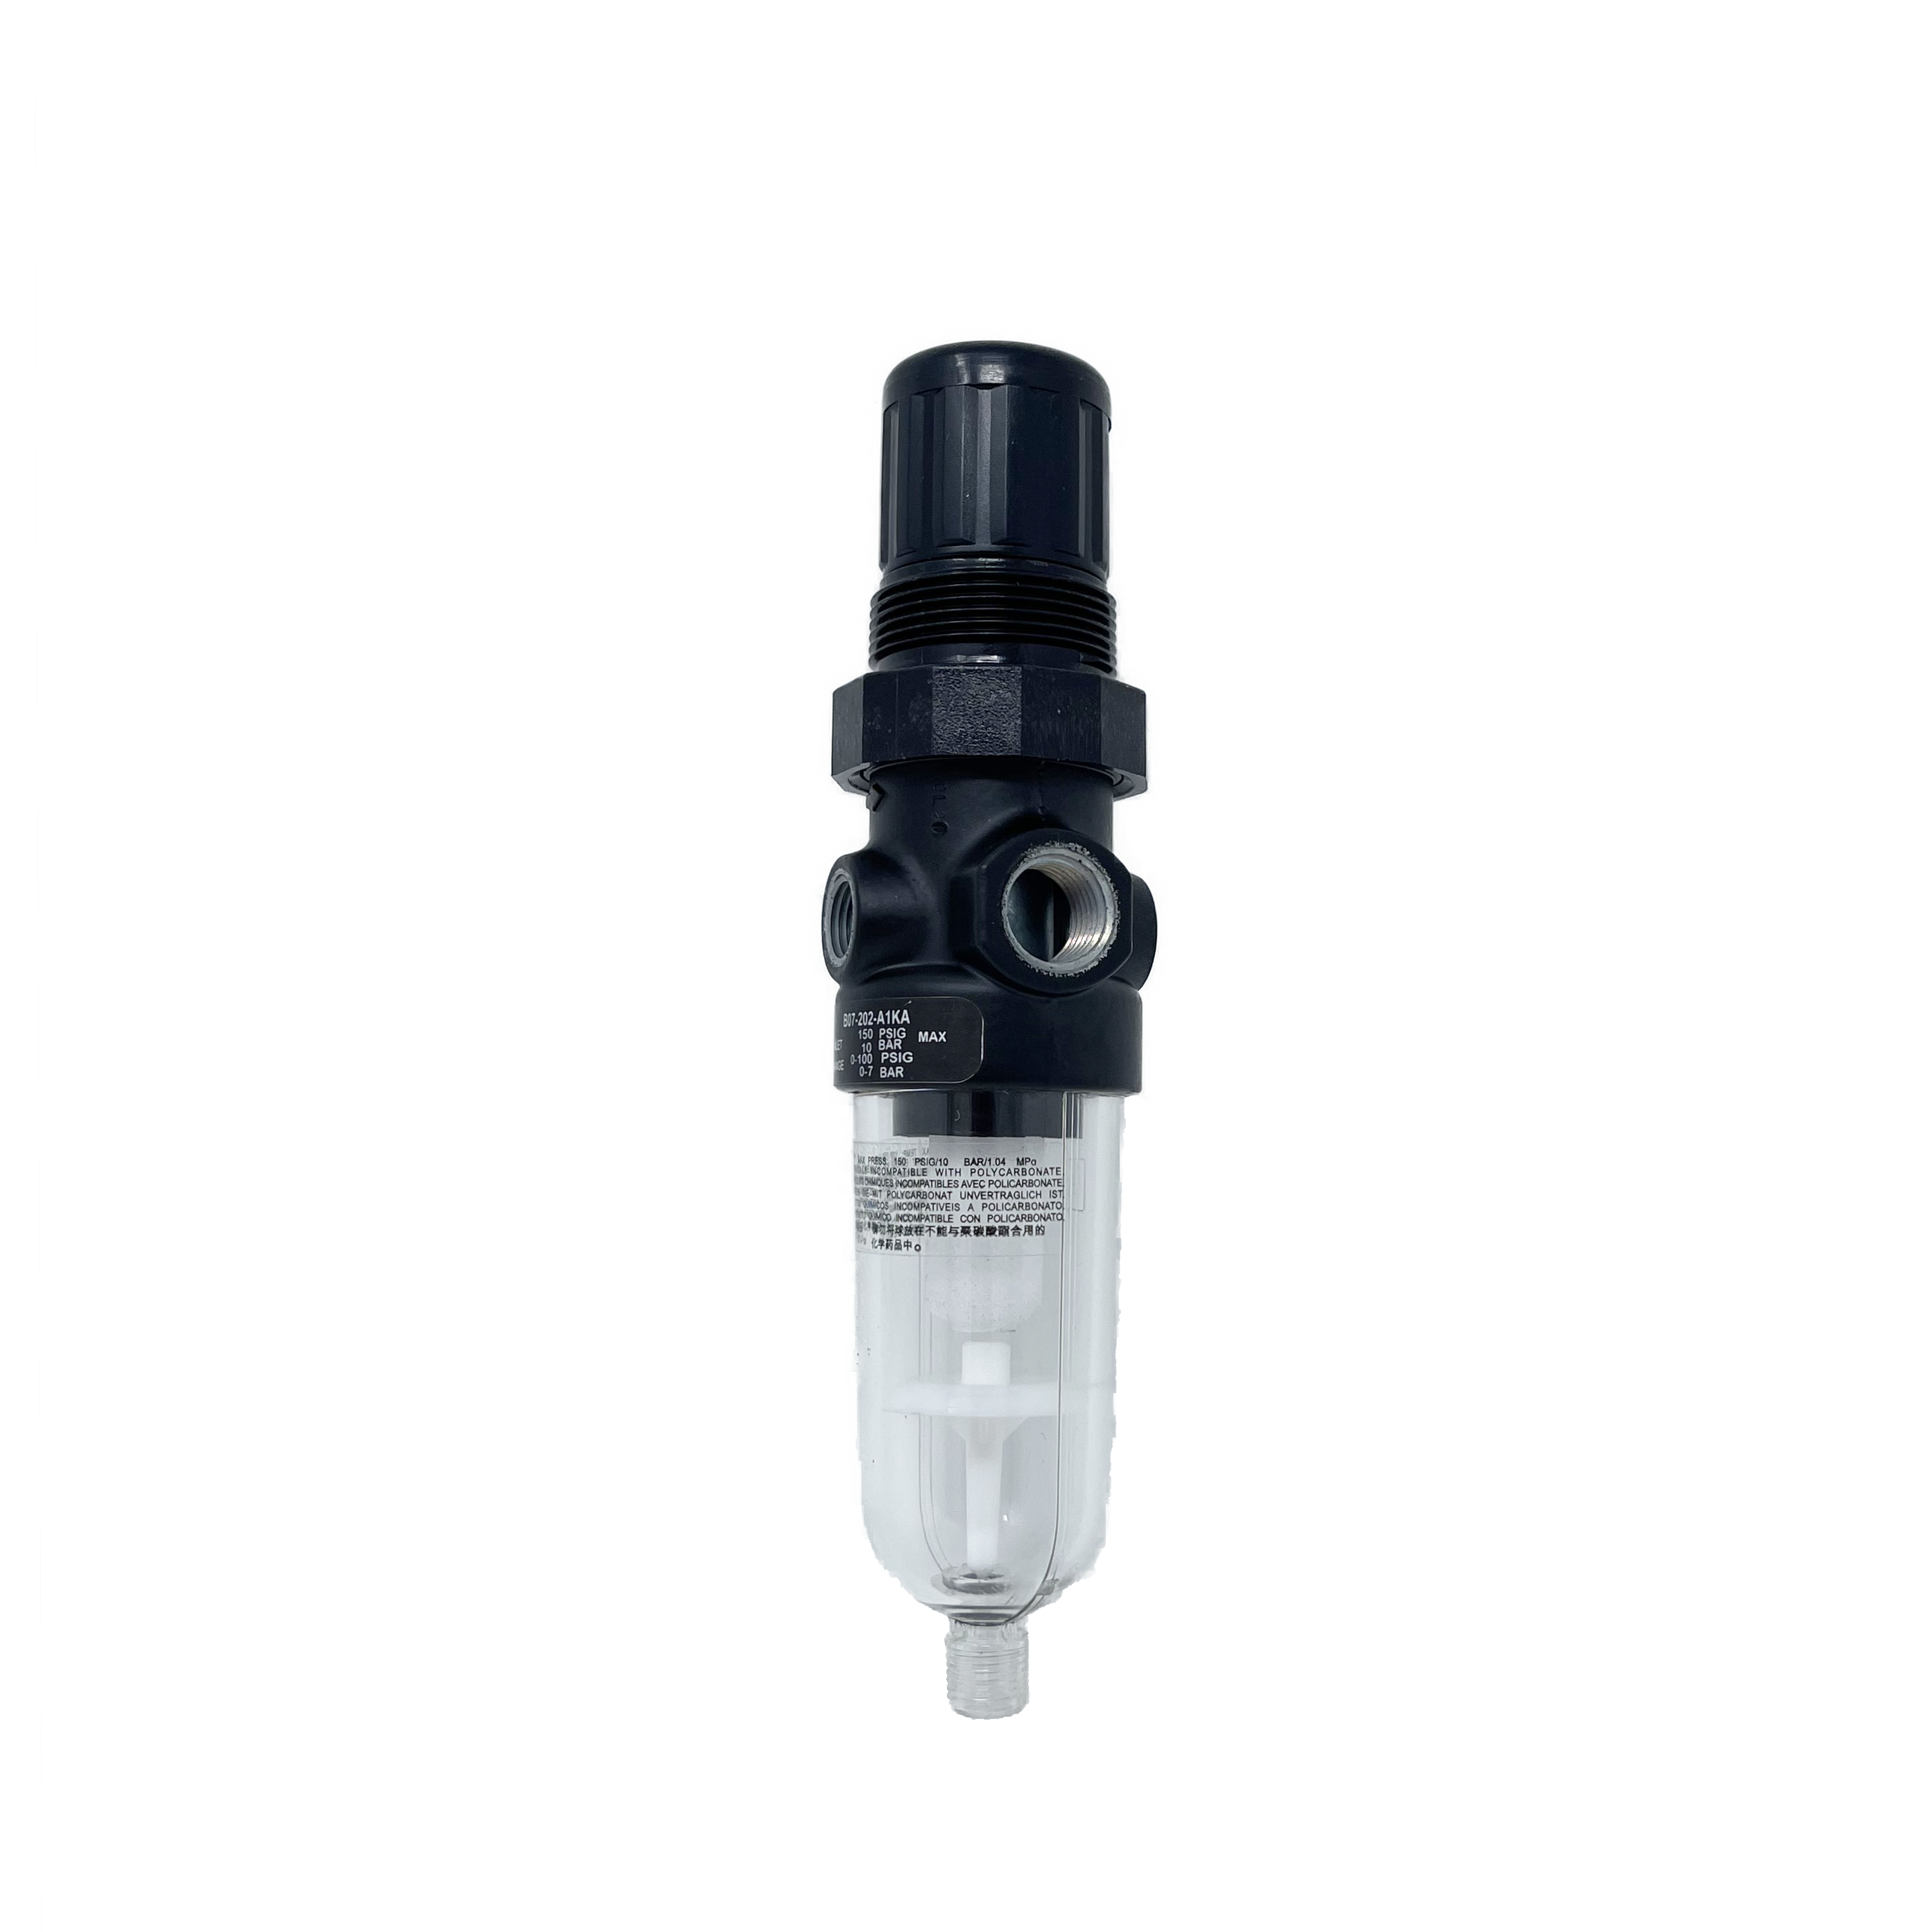 B07-201-A1EA : Norgren B07 miniature filter/regulator, Transparent Bowl, Relieving, Without Gauge, Automatic Drain, 5-Micron, 5